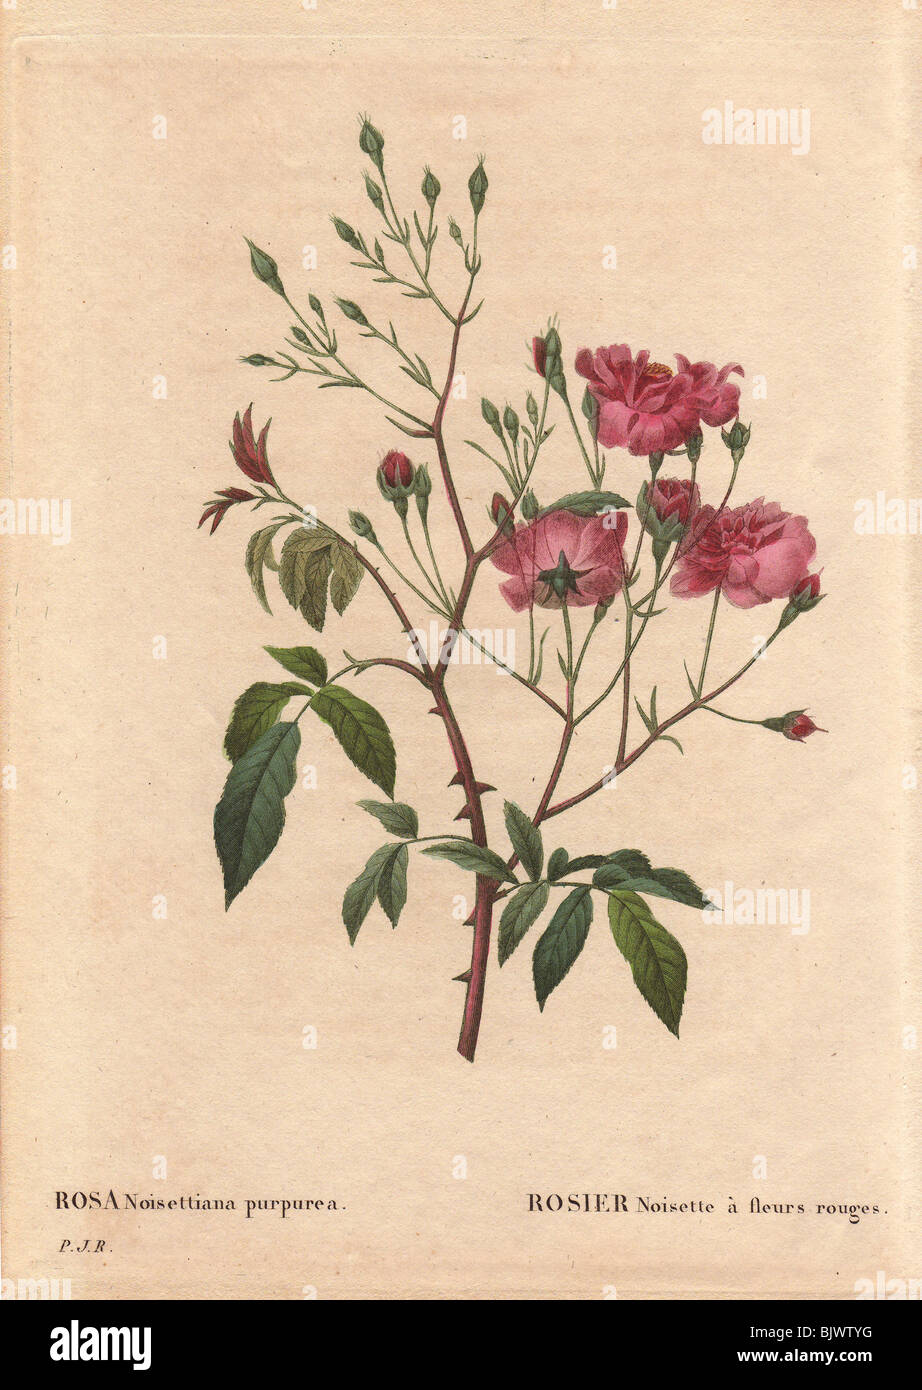 Pink noisette rose with dusty pink and crimson flowers (Rosa noisettiana purpurea) Stock Photo